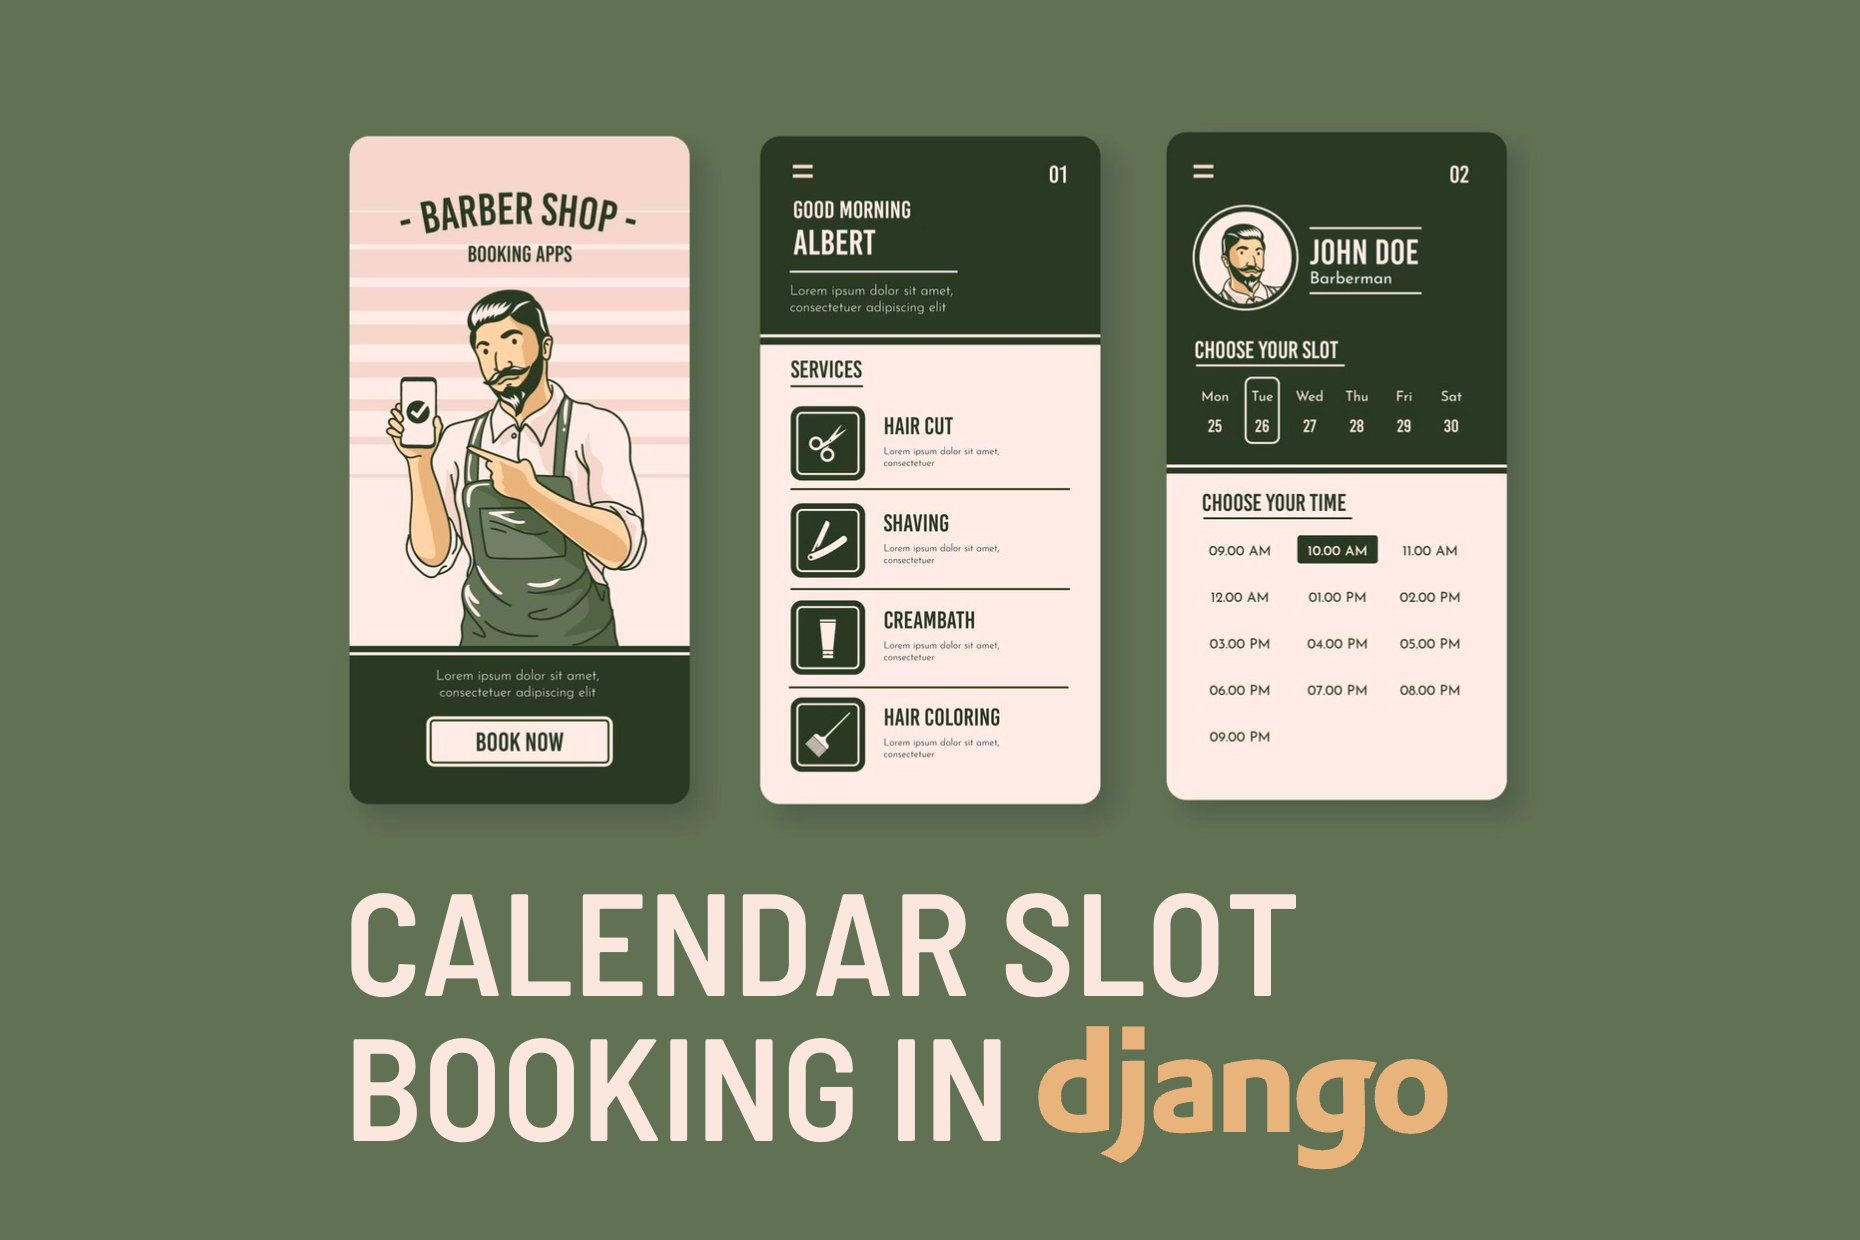 How to build a calendar slot booking app in Django?